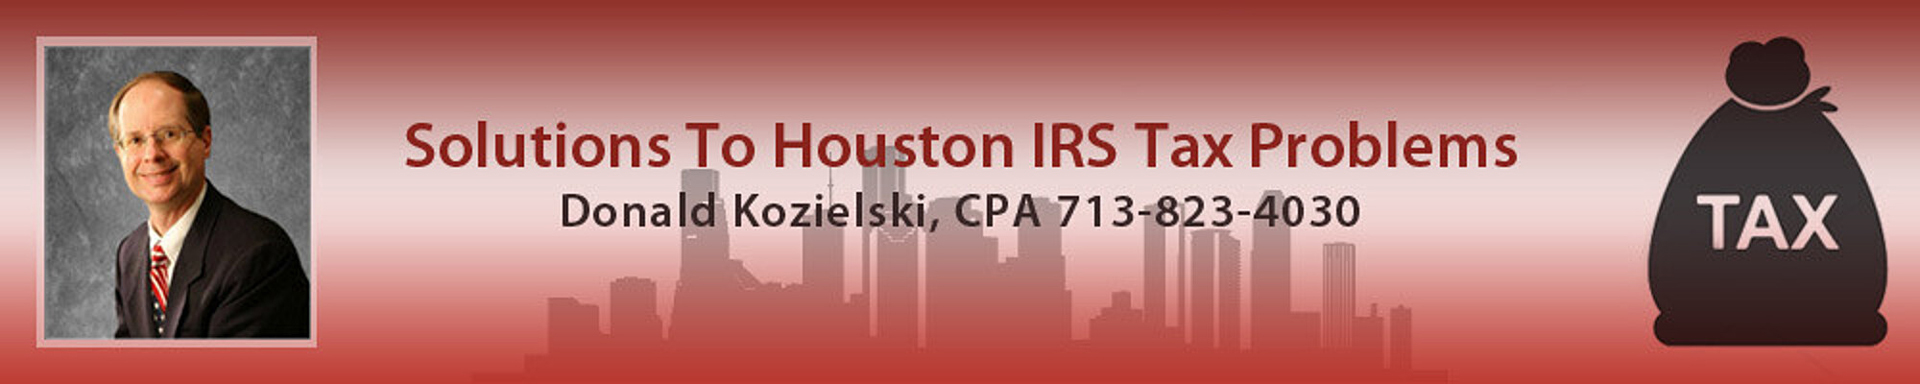 Houston IRS Tax Help - Donald Kozielski, CPA, 713-823-4030